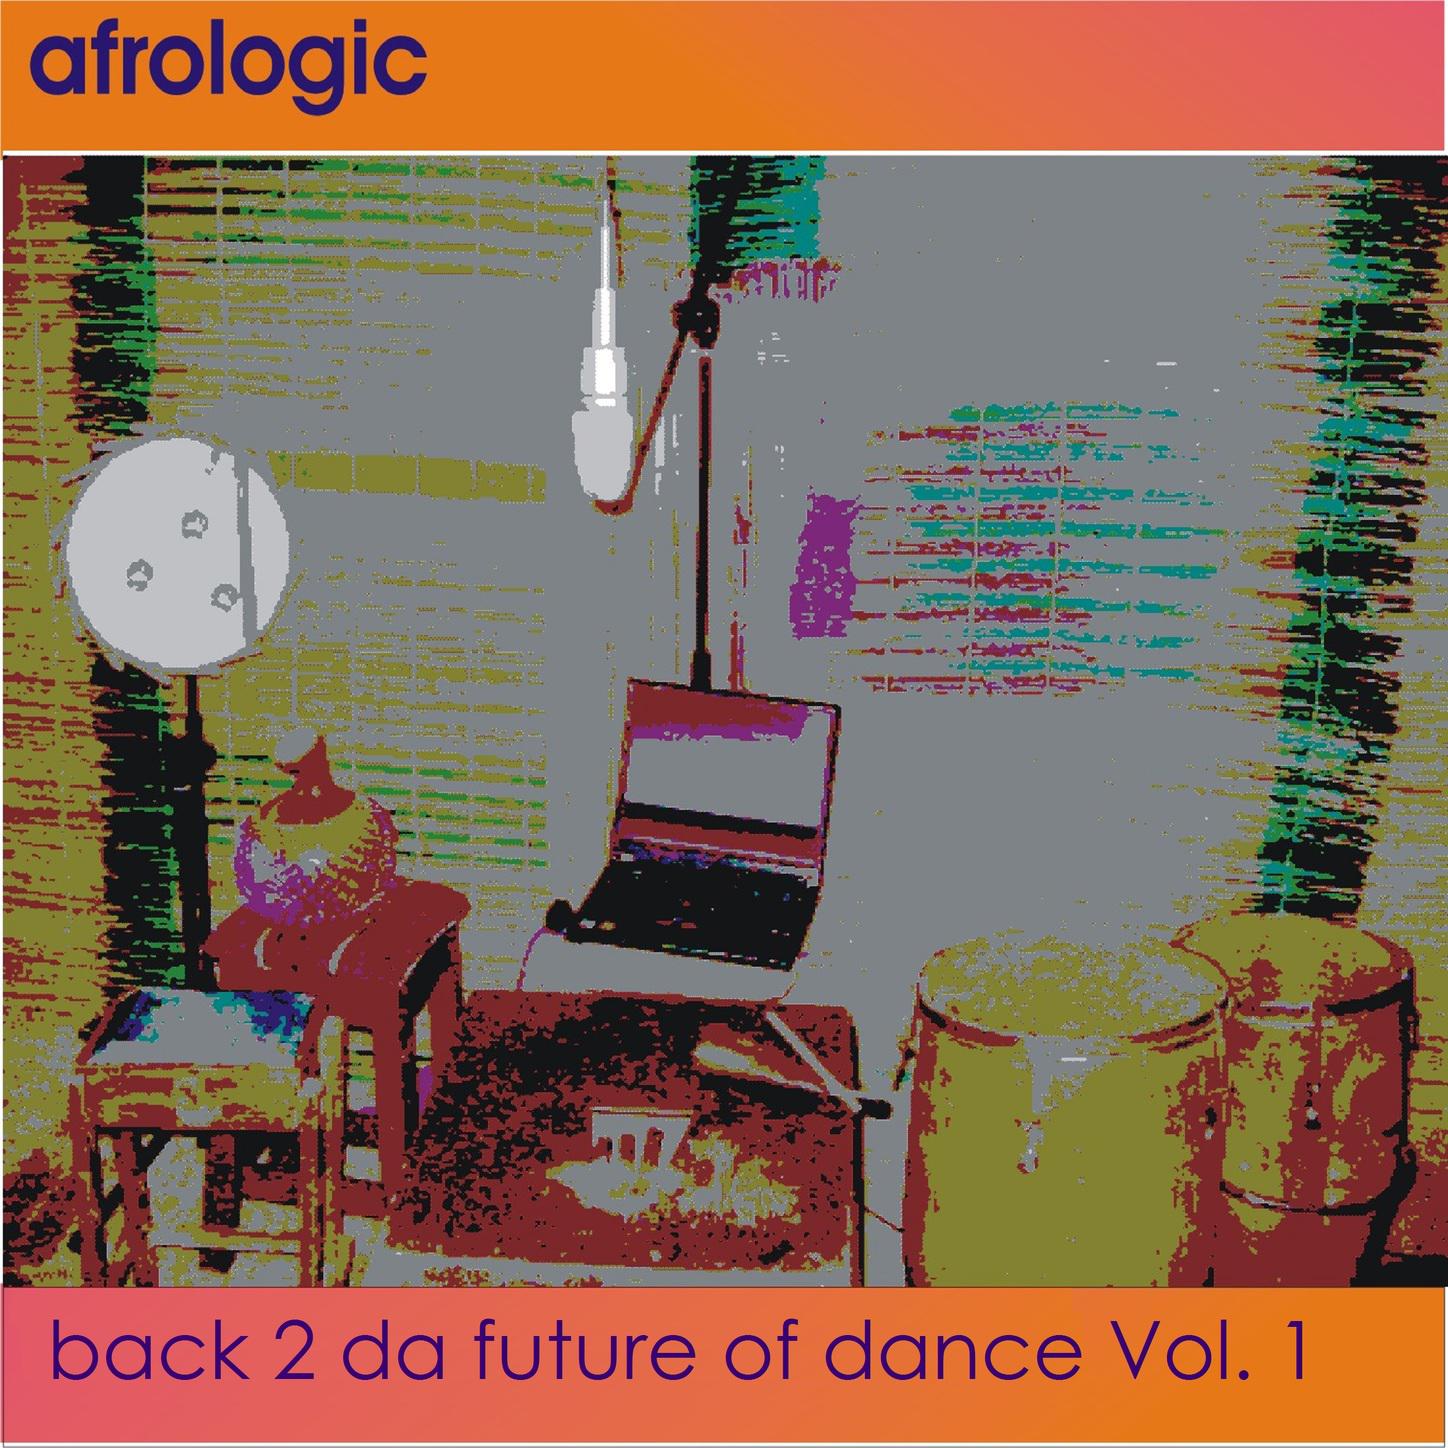 Back to da future of dance Vol, 1